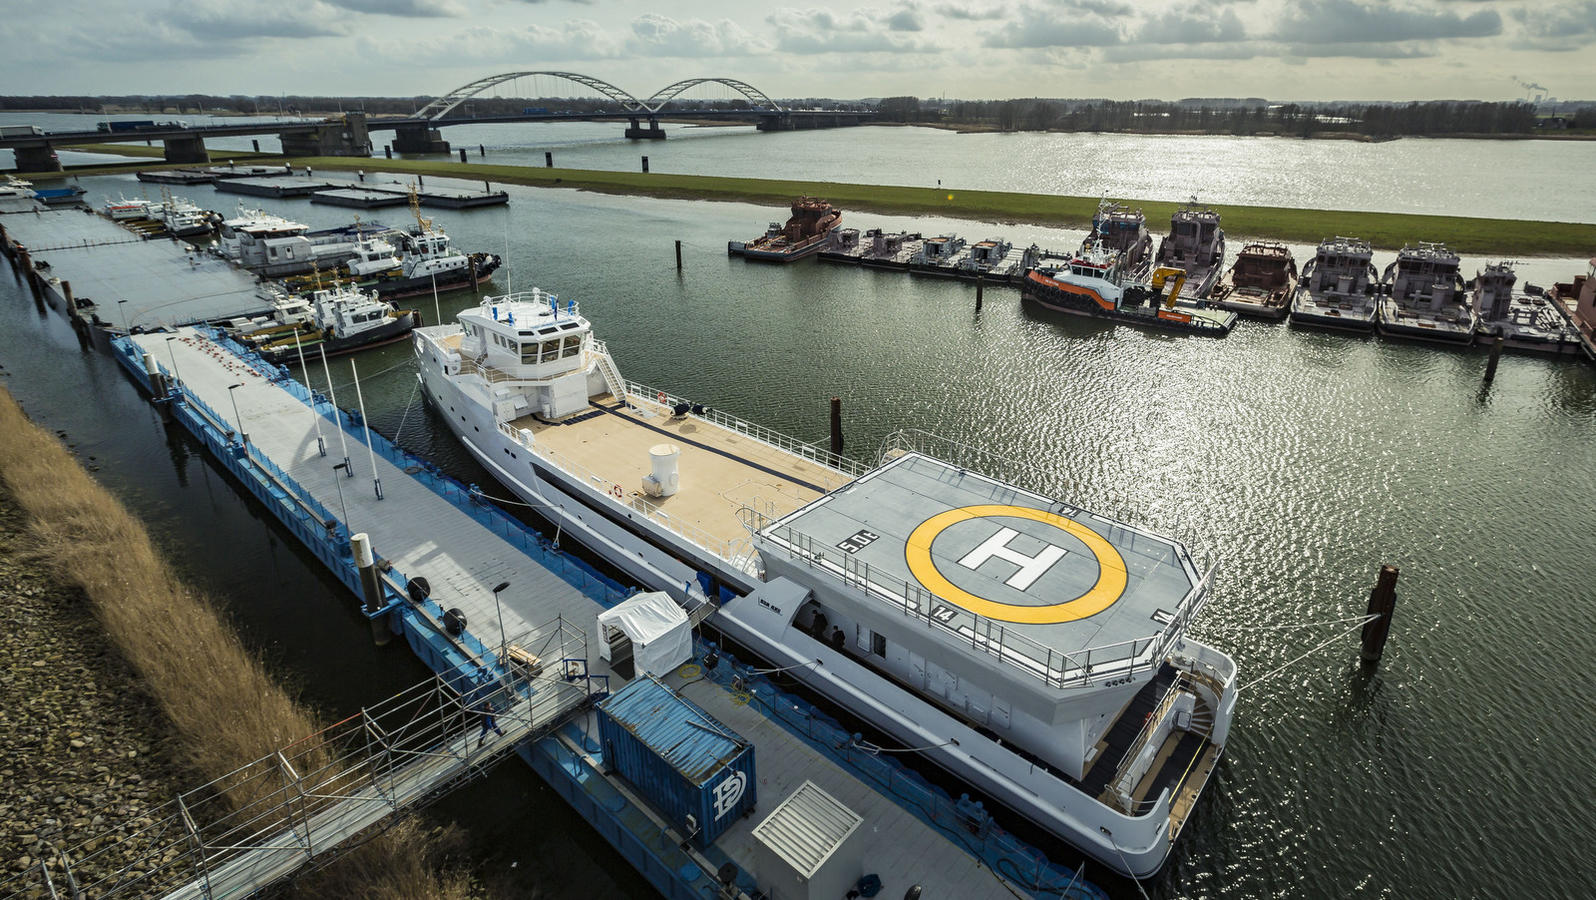 Damen launches 69m superyacht support vessel Game Changer